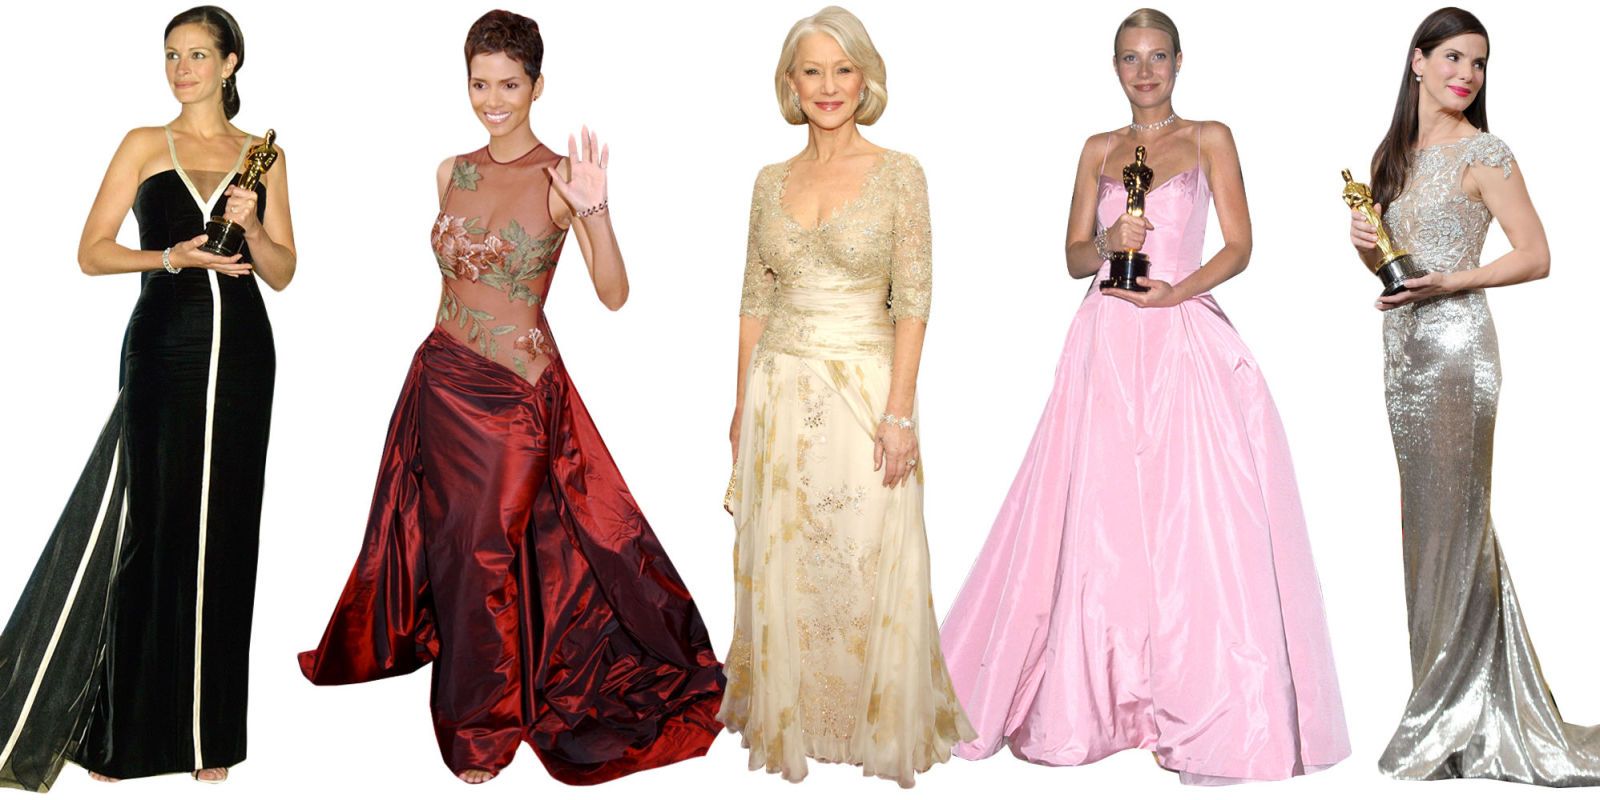 Jennifer Garner Golden Globes 2013: See The Actress' Beautiful Gown!  (PHOTOS) | HuffPost Life